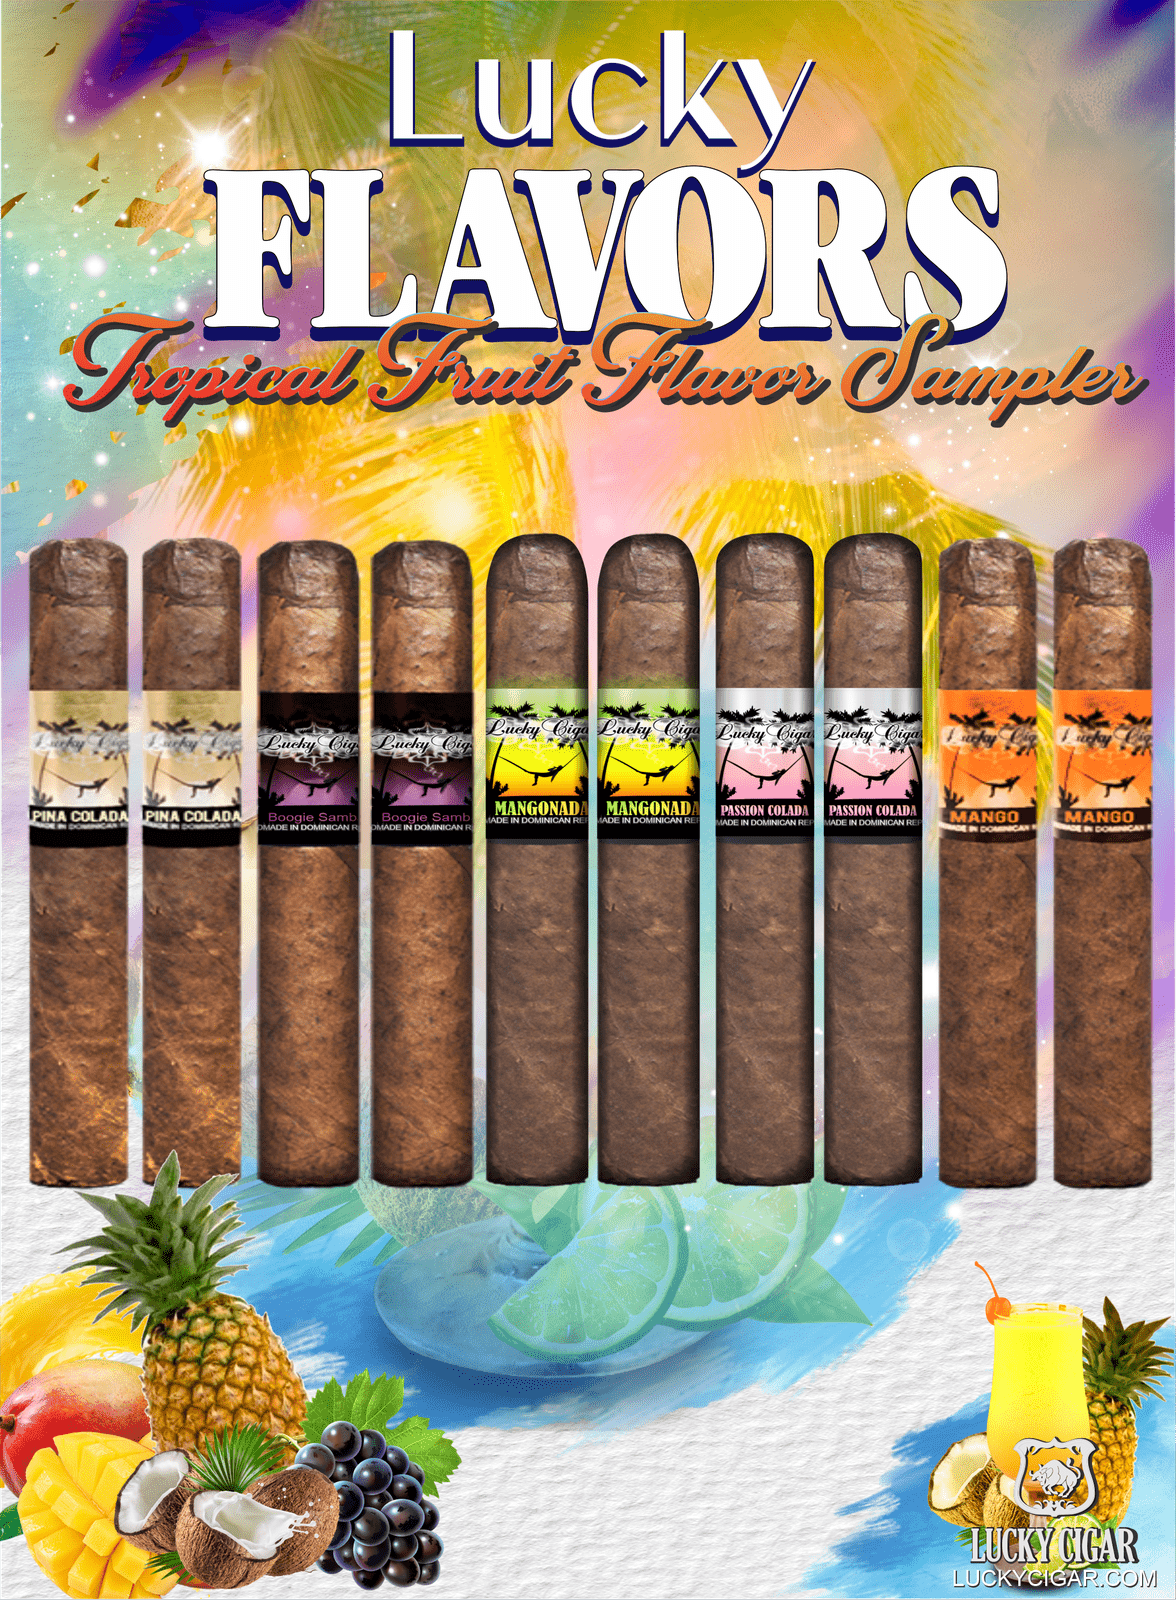 Flavored Cigars: Lucky Flavors 10 Piece Tropical Fruit Sampler - Pina Colada, Boogie Samba, Mangonada, Passion Colada, Mango 2 Pina Colada 5x42 Cigars 2 Boogie Samba 5x42 Cigars 2 Mangonada 5x42 Cigars 2 Passion Colada 5x42 Cigars 2 Mango 5x42 Cigars